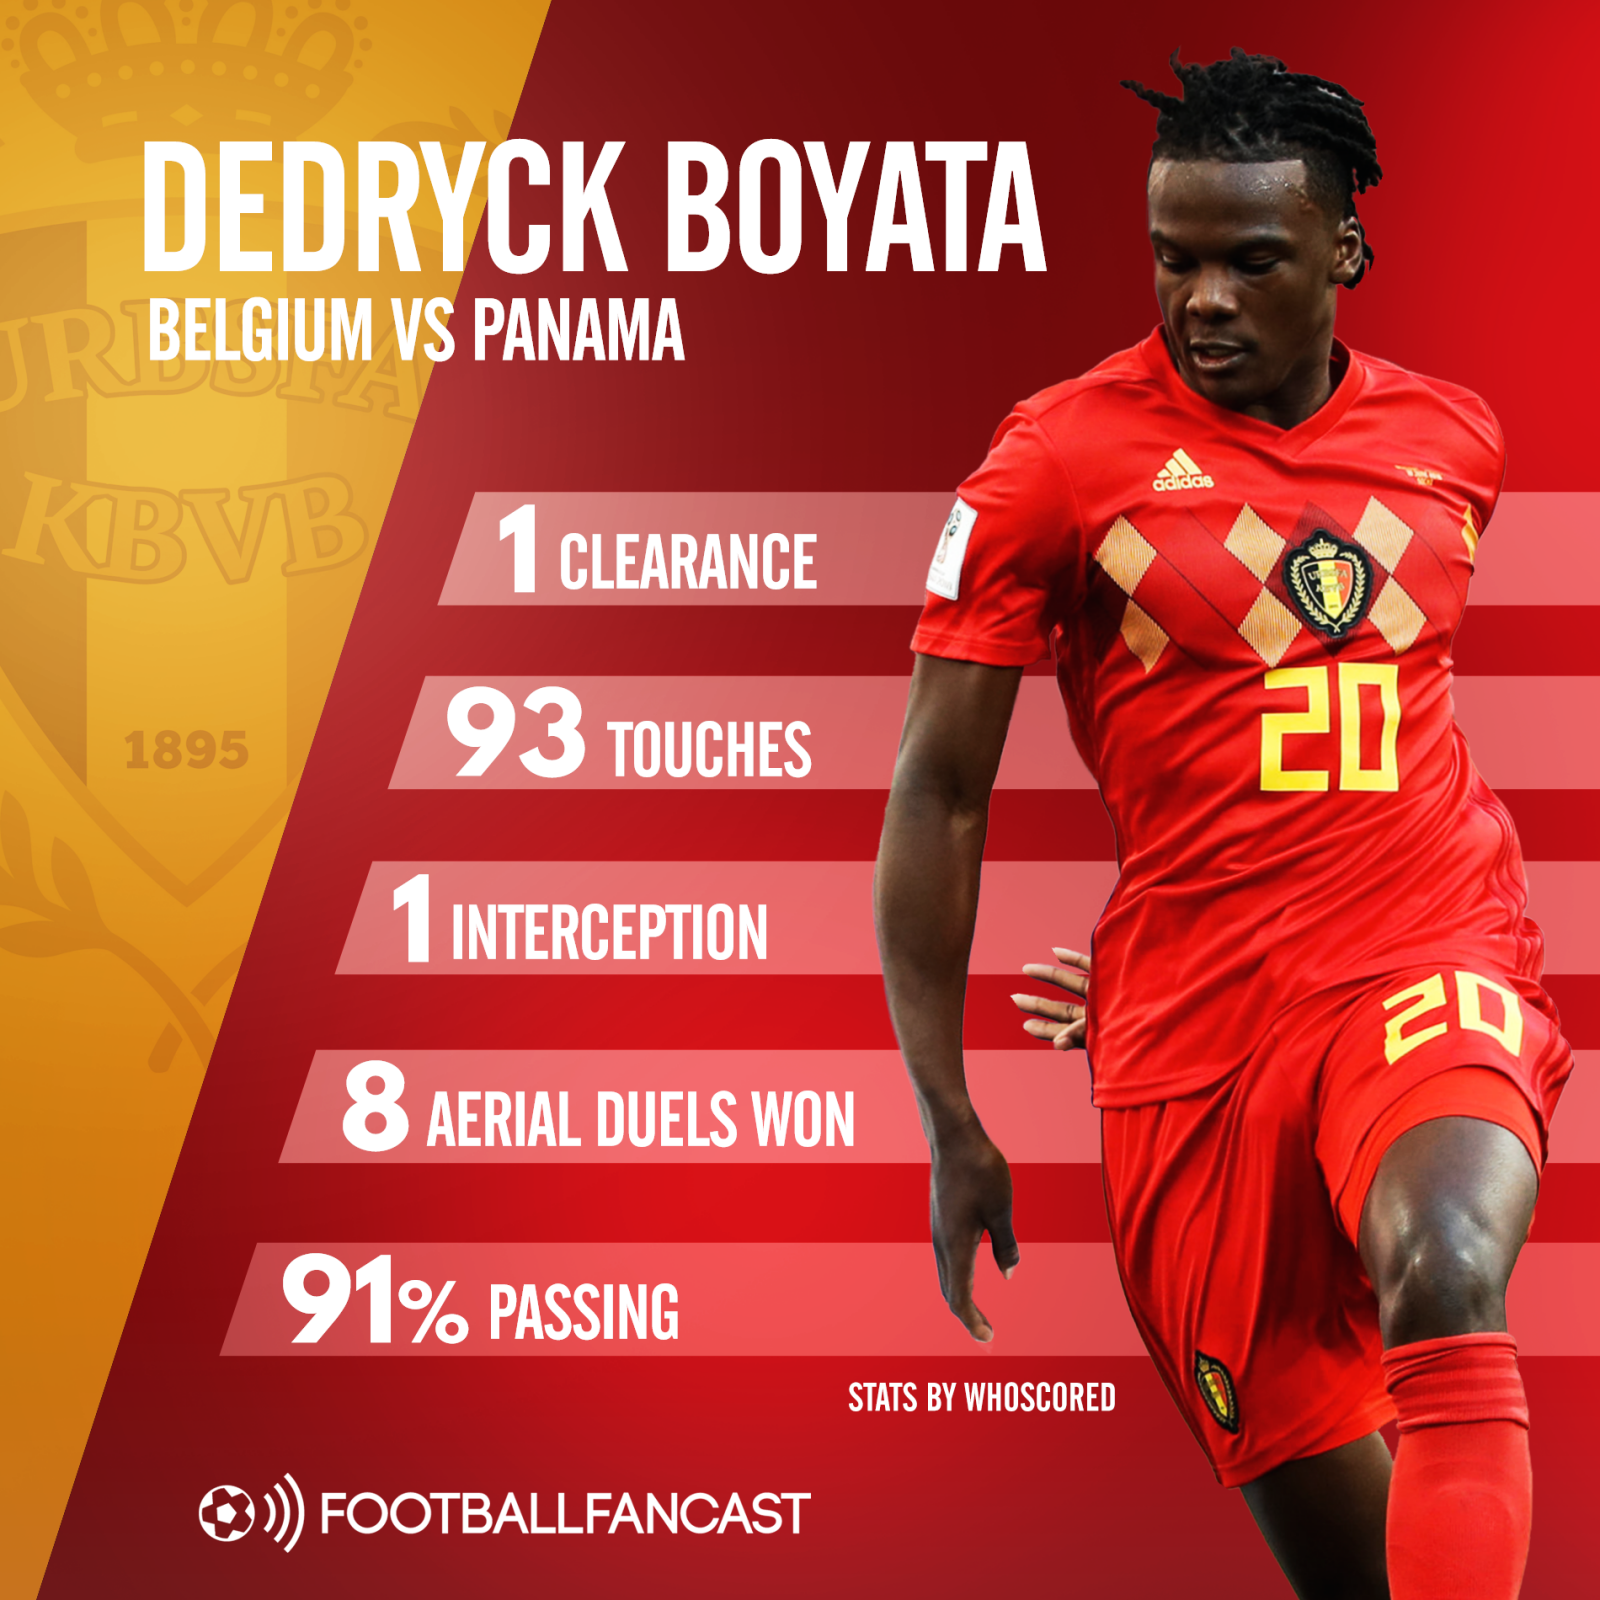 Dedryck Boyata stats vs Panama